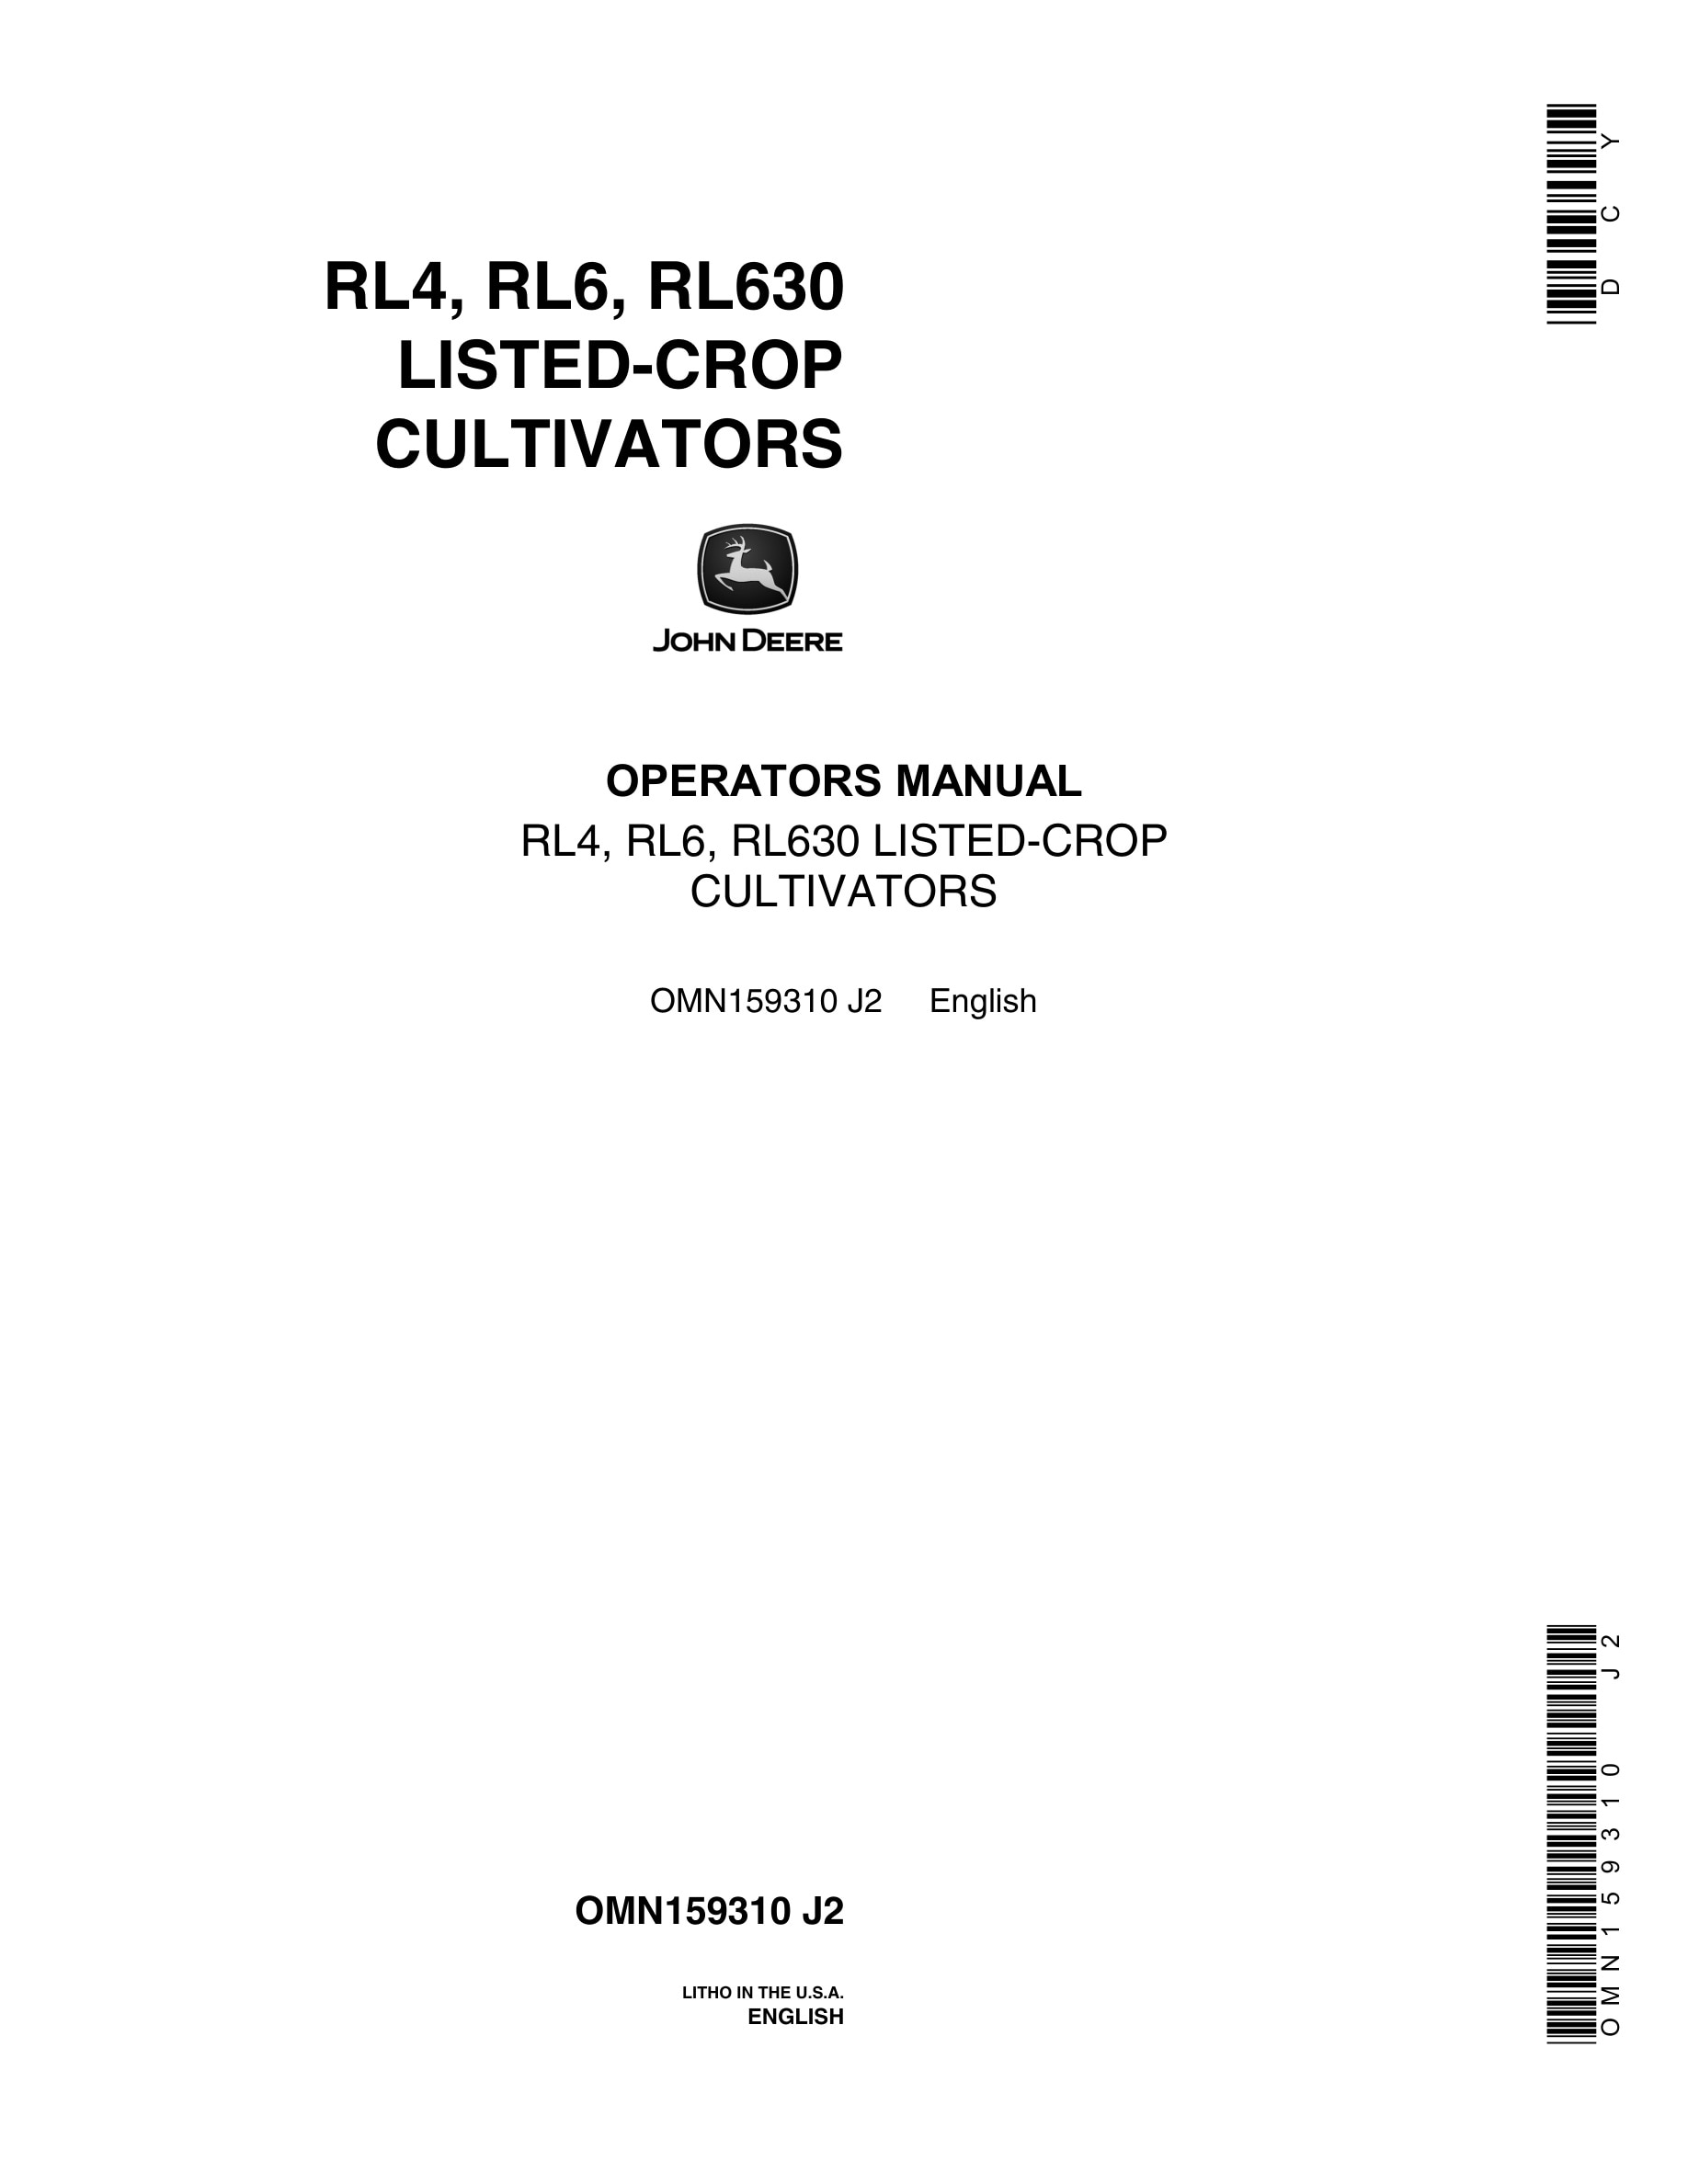 John Deere RL4, RL6, RL630 LISTED-CROP CULTIVATOR Operator Manual OMN159310-1